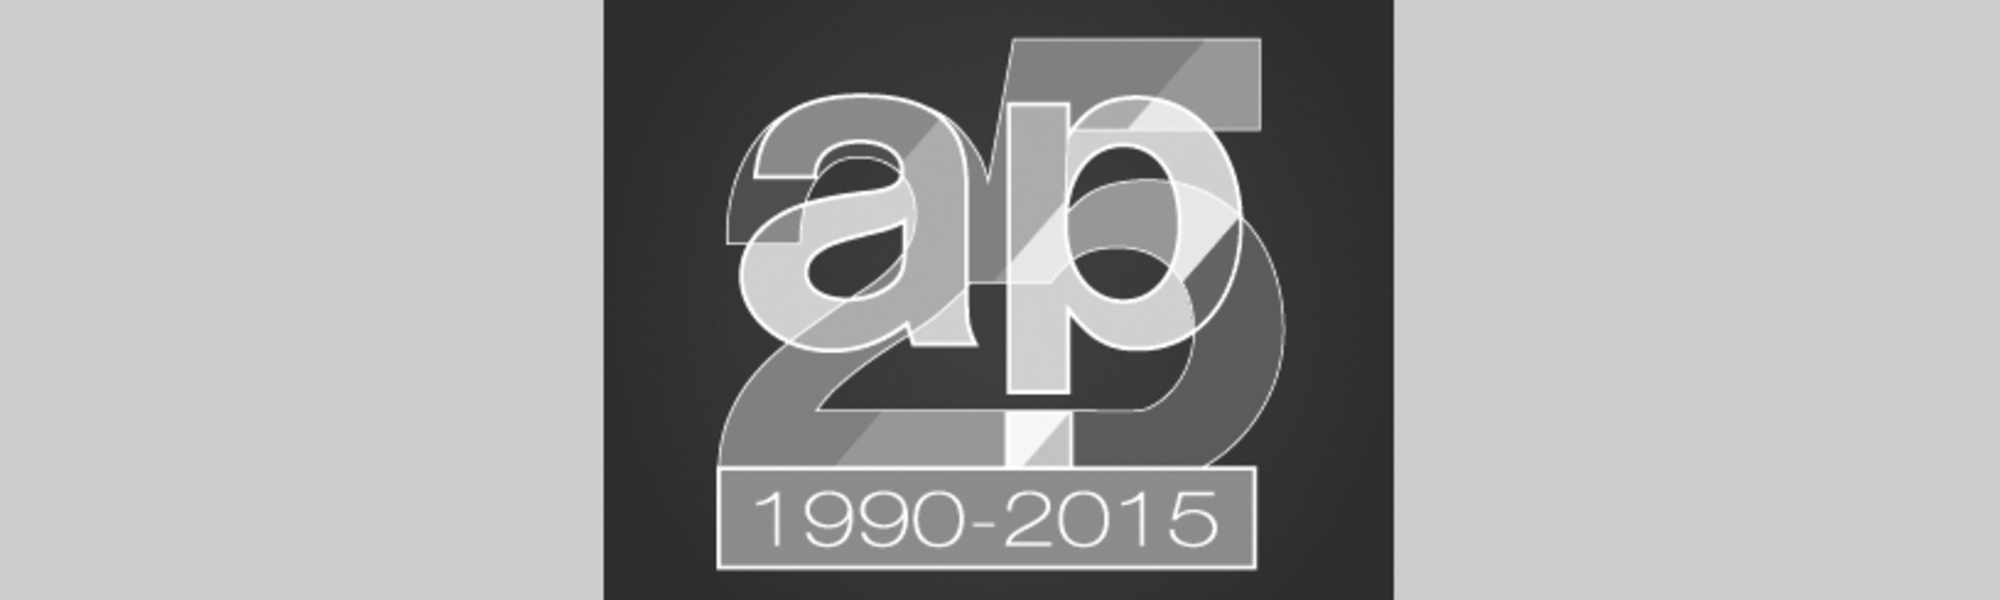 Ap Group Anniversary3